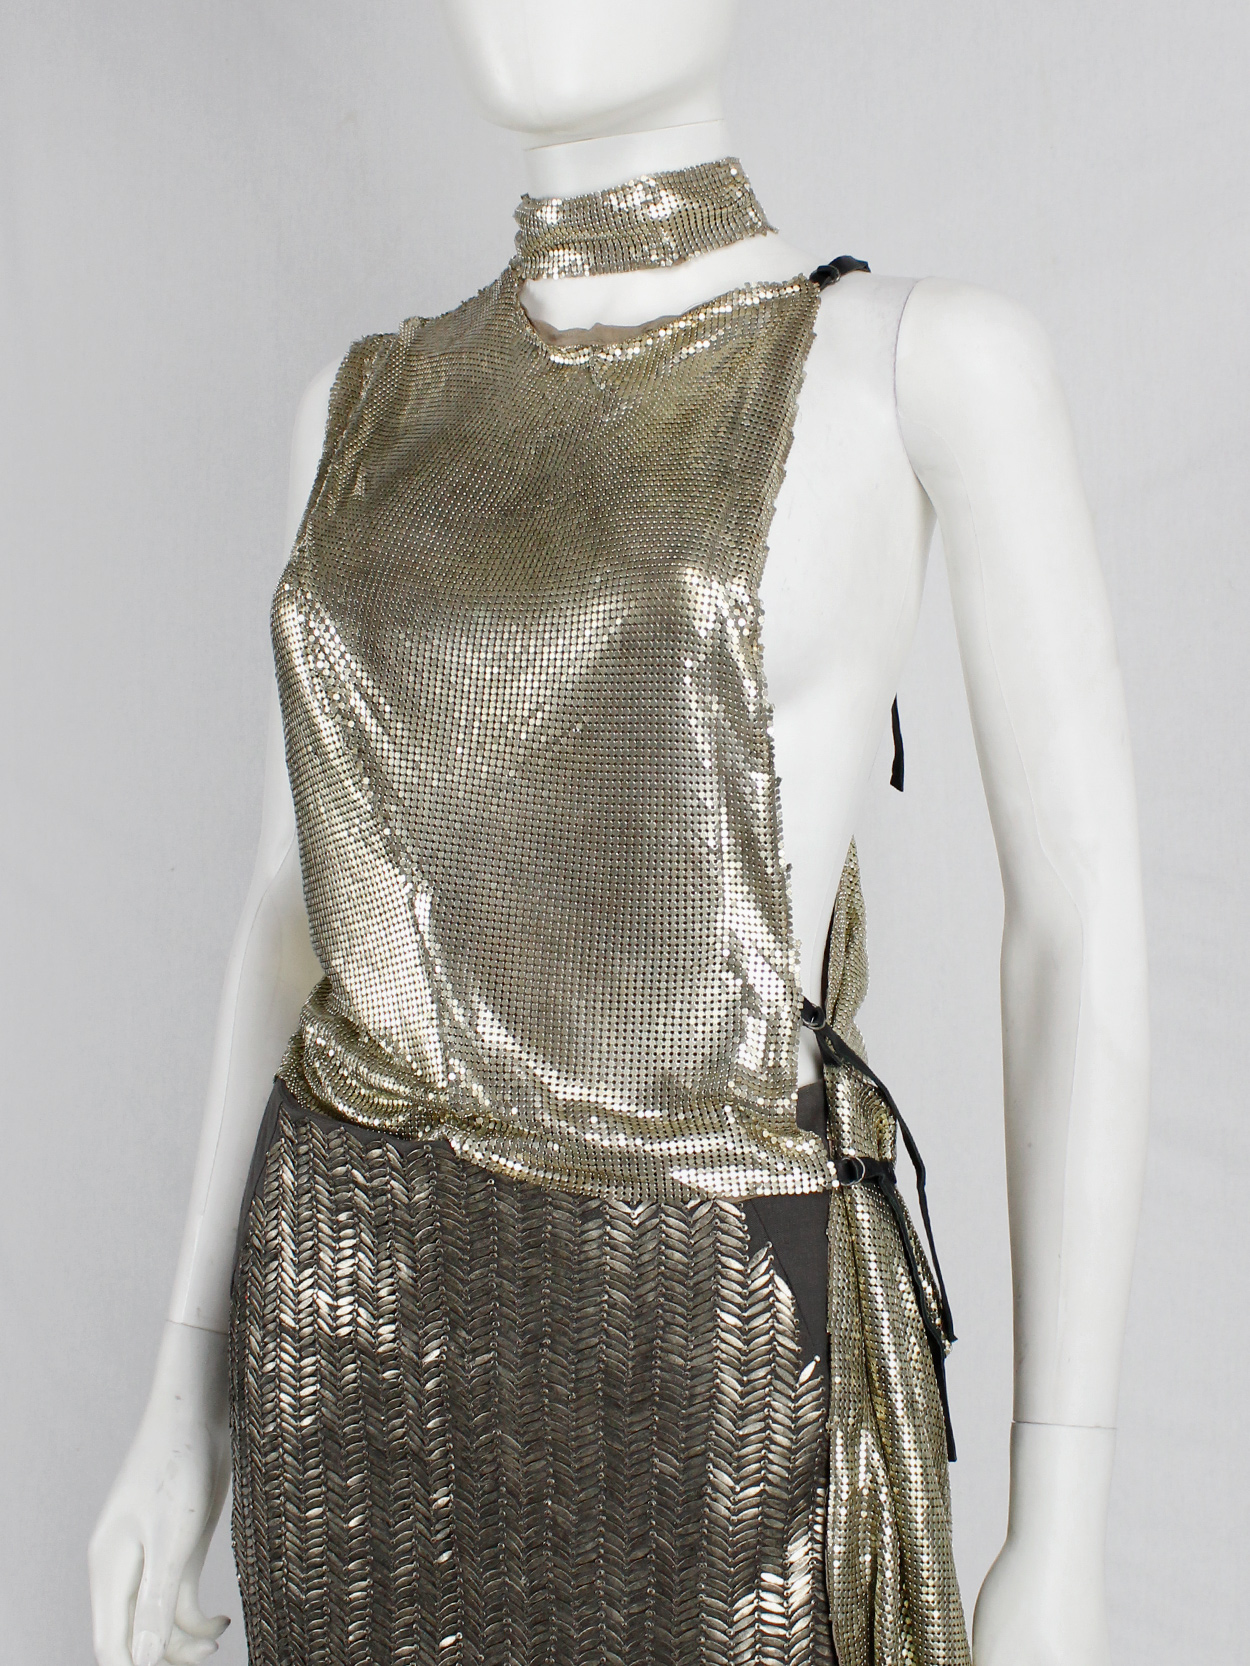 AF Vandevorst gold glowmesh top with open sides and leather strapsspring 2011 (9)